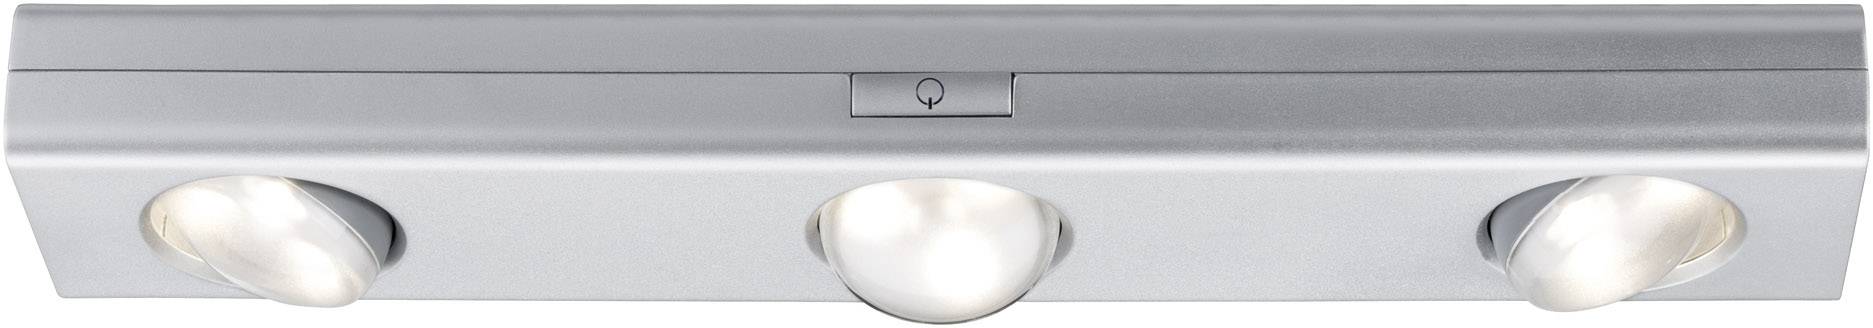 eingebaut 0.54 Jiggle LED W Chrom fest kaufen Paulmann (matt) LED LED-Schrankleuchte Warmweiß